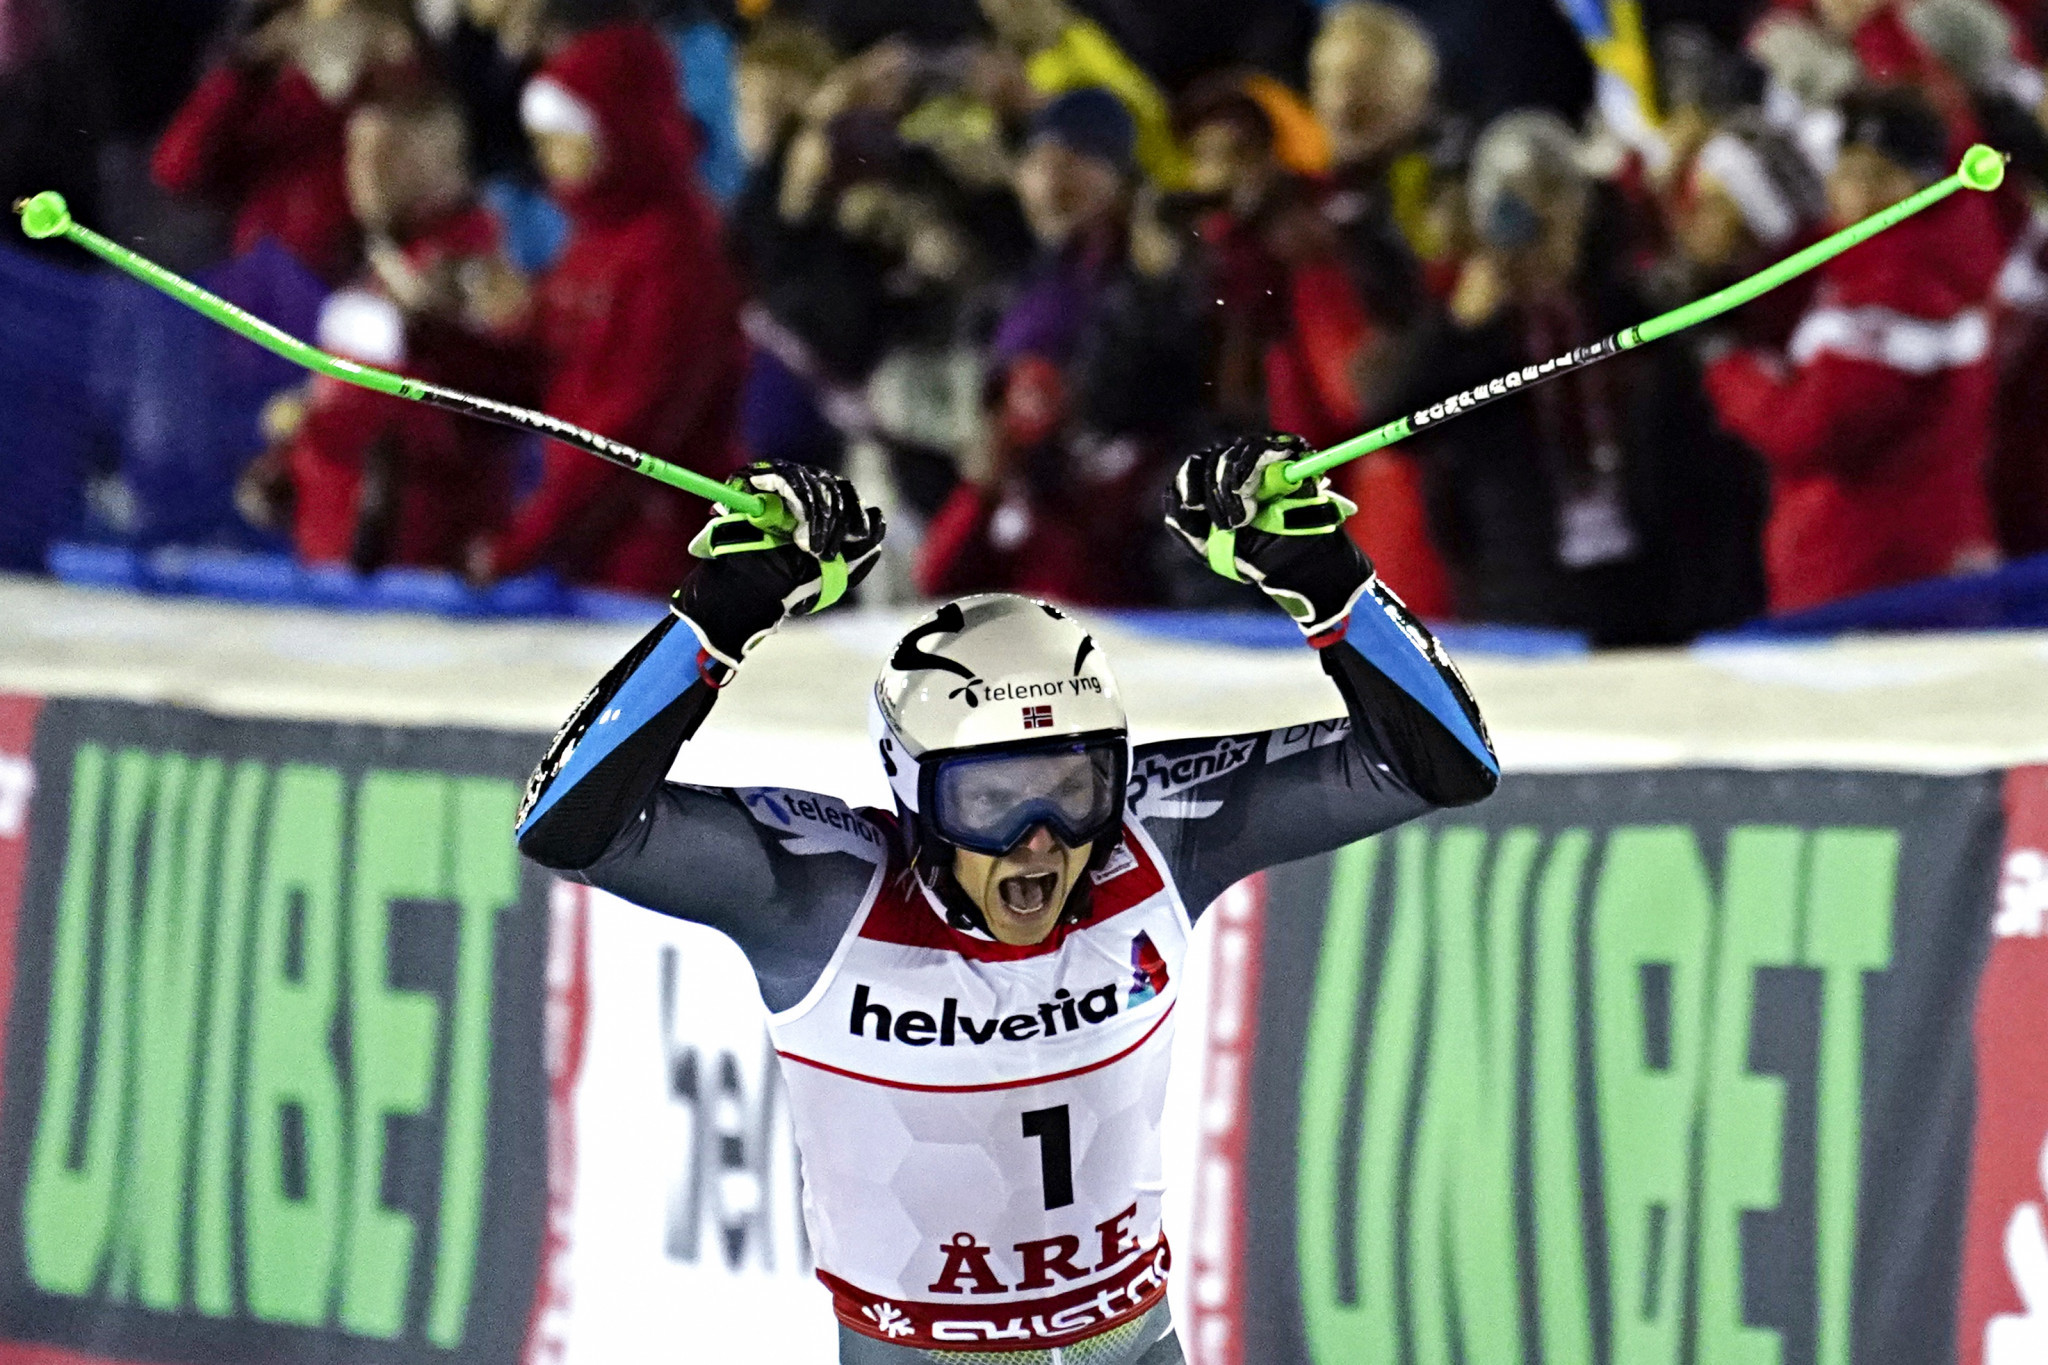 Kristoffersen overcomes favourites to claim giant slalom crown at FIS Alpine World Ski Championships